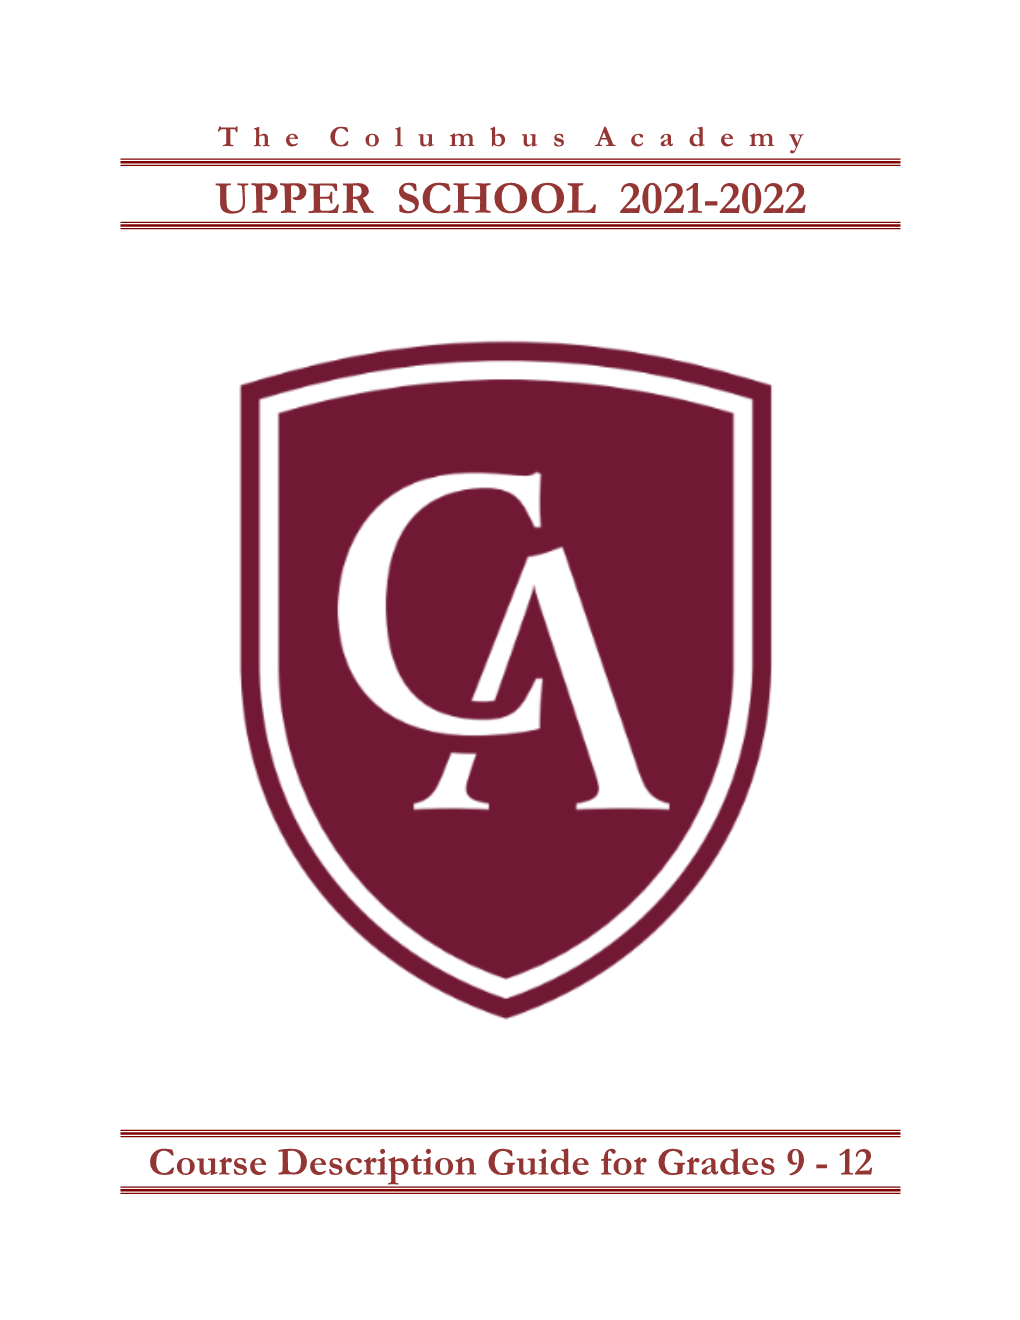 2021-22 Upper School Course Description Guide